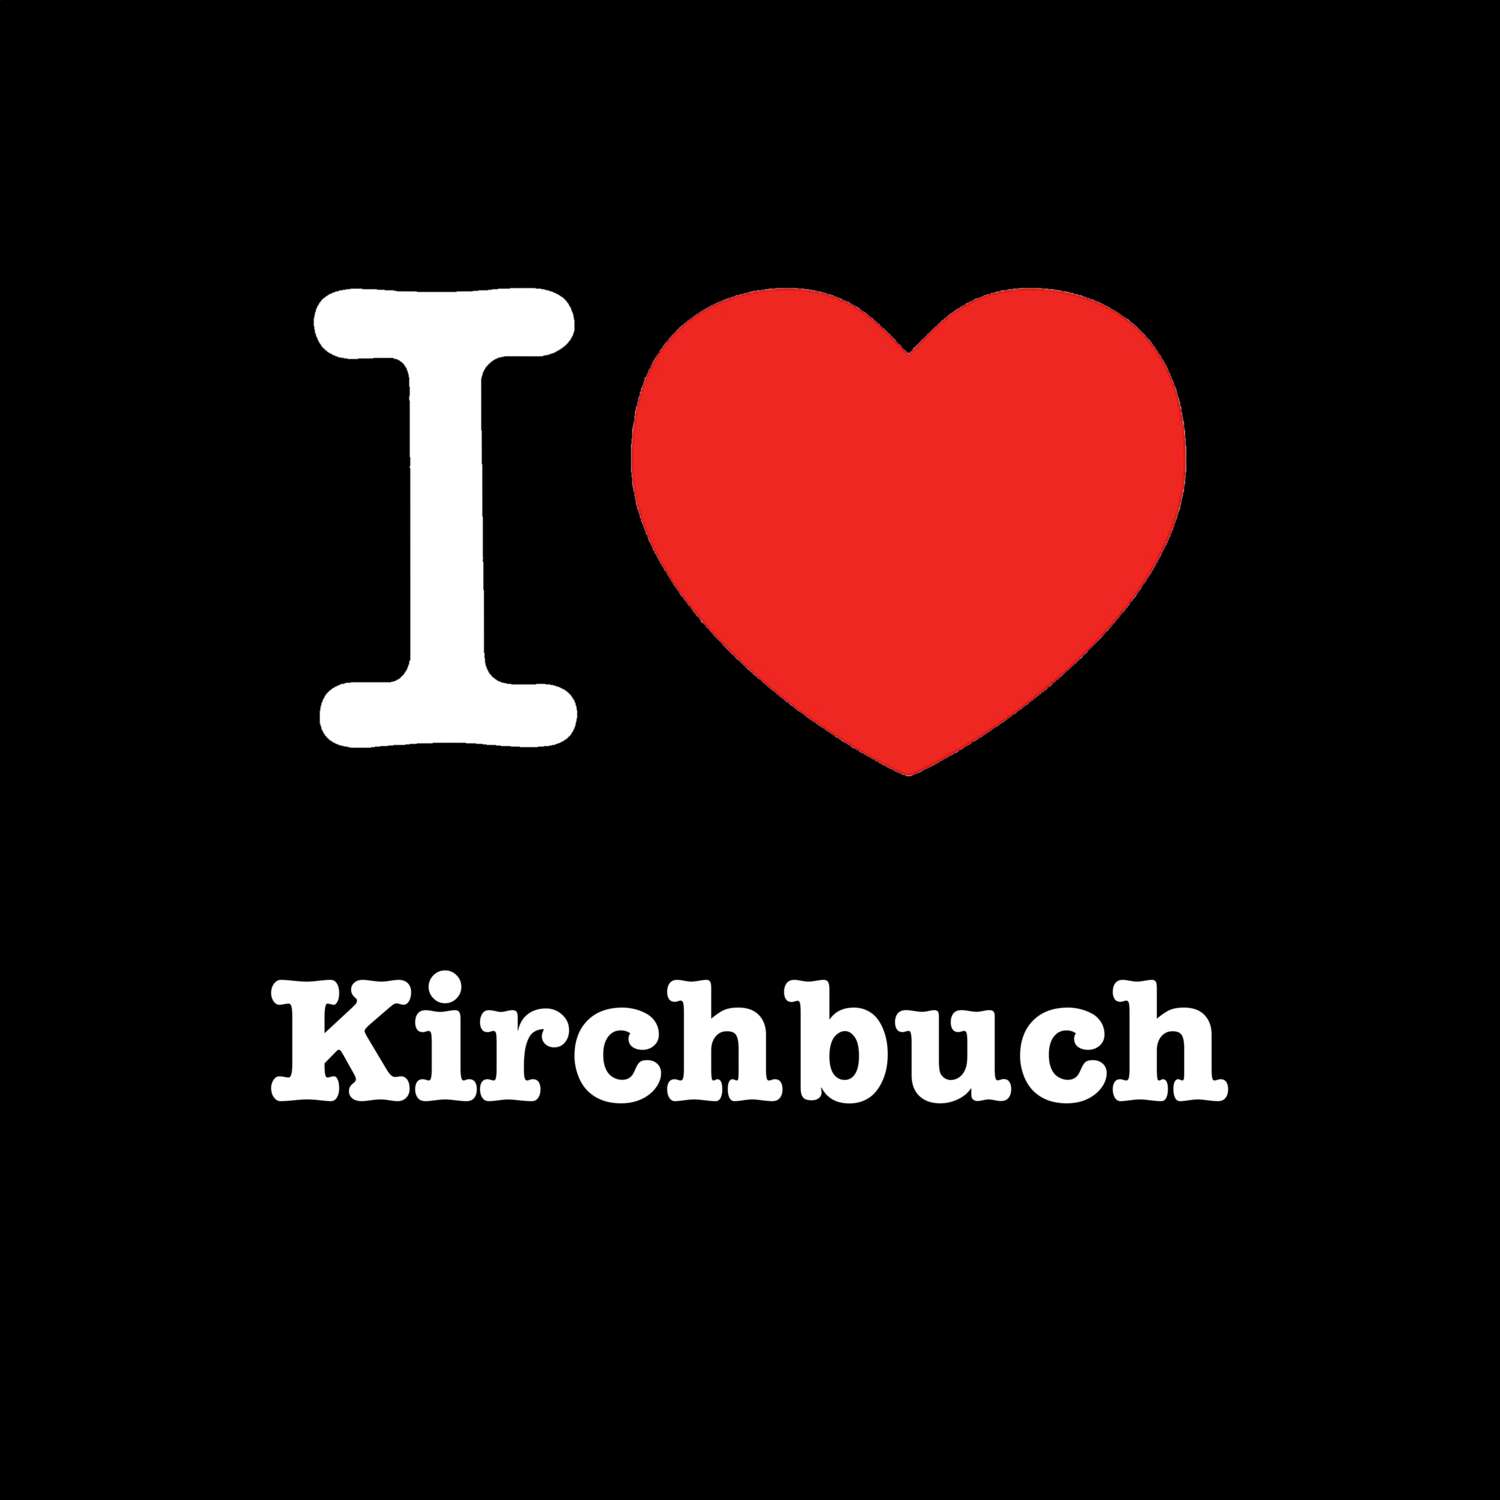 Kirchbuch T-Shirt »I love«